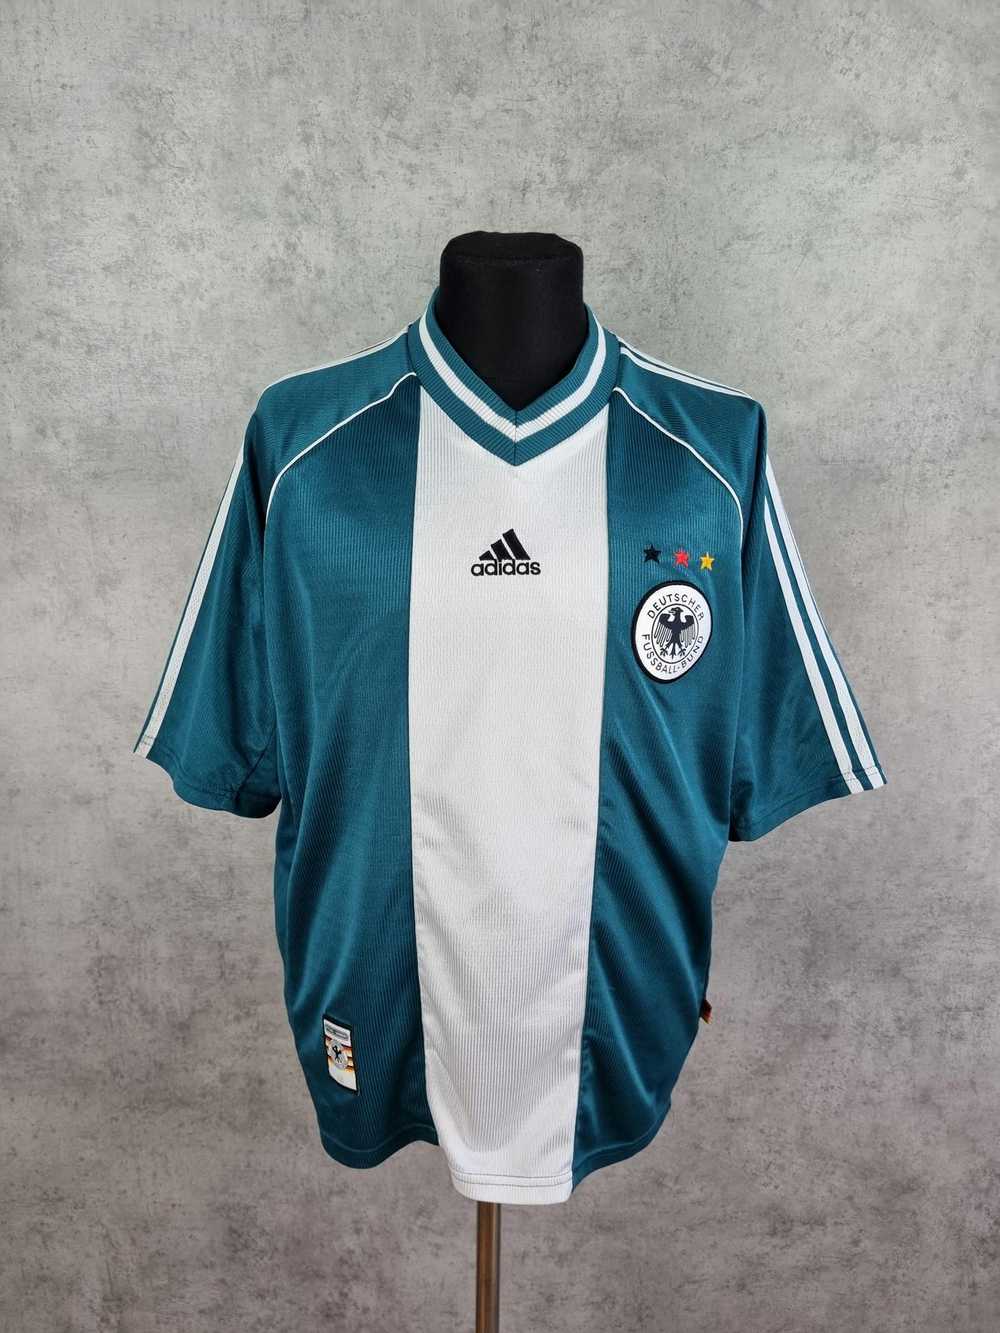 Adidas × Jersey × Soccer Jersey 90s ADIDAS Vintag… - image 3